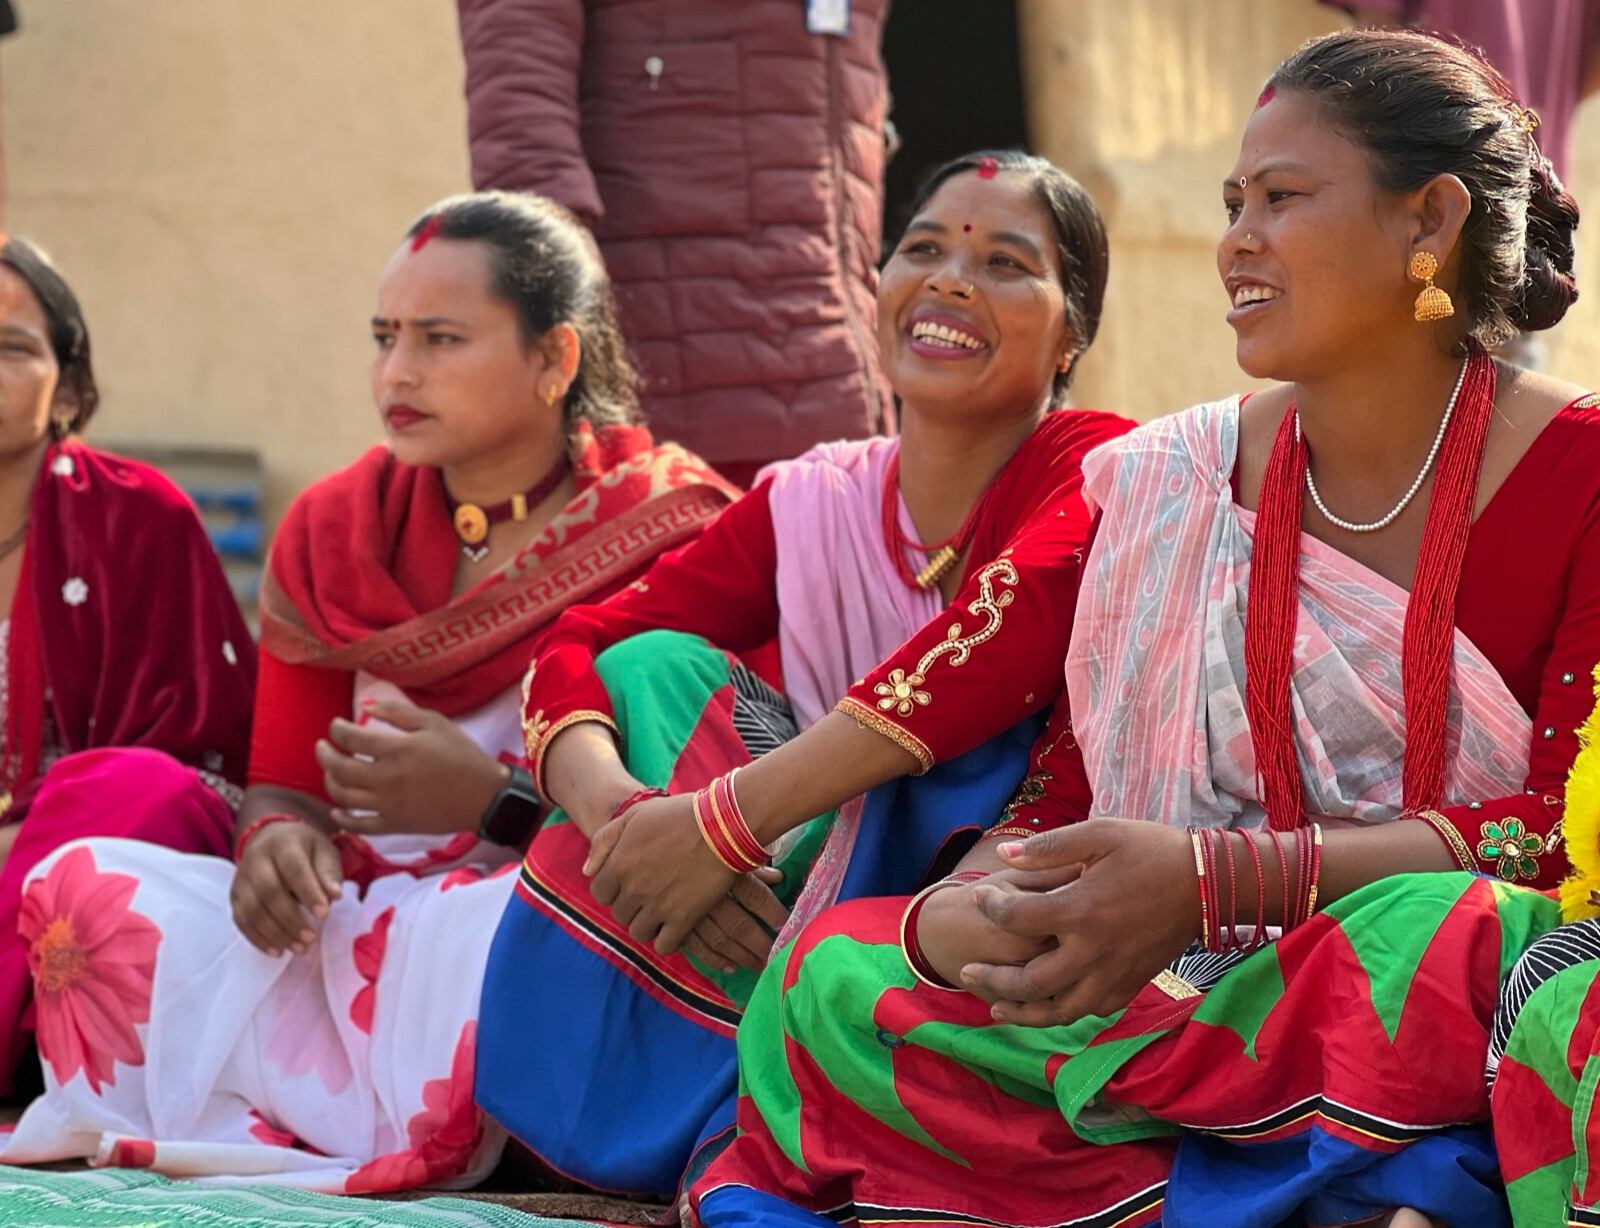 Tharu women in their traditional dress